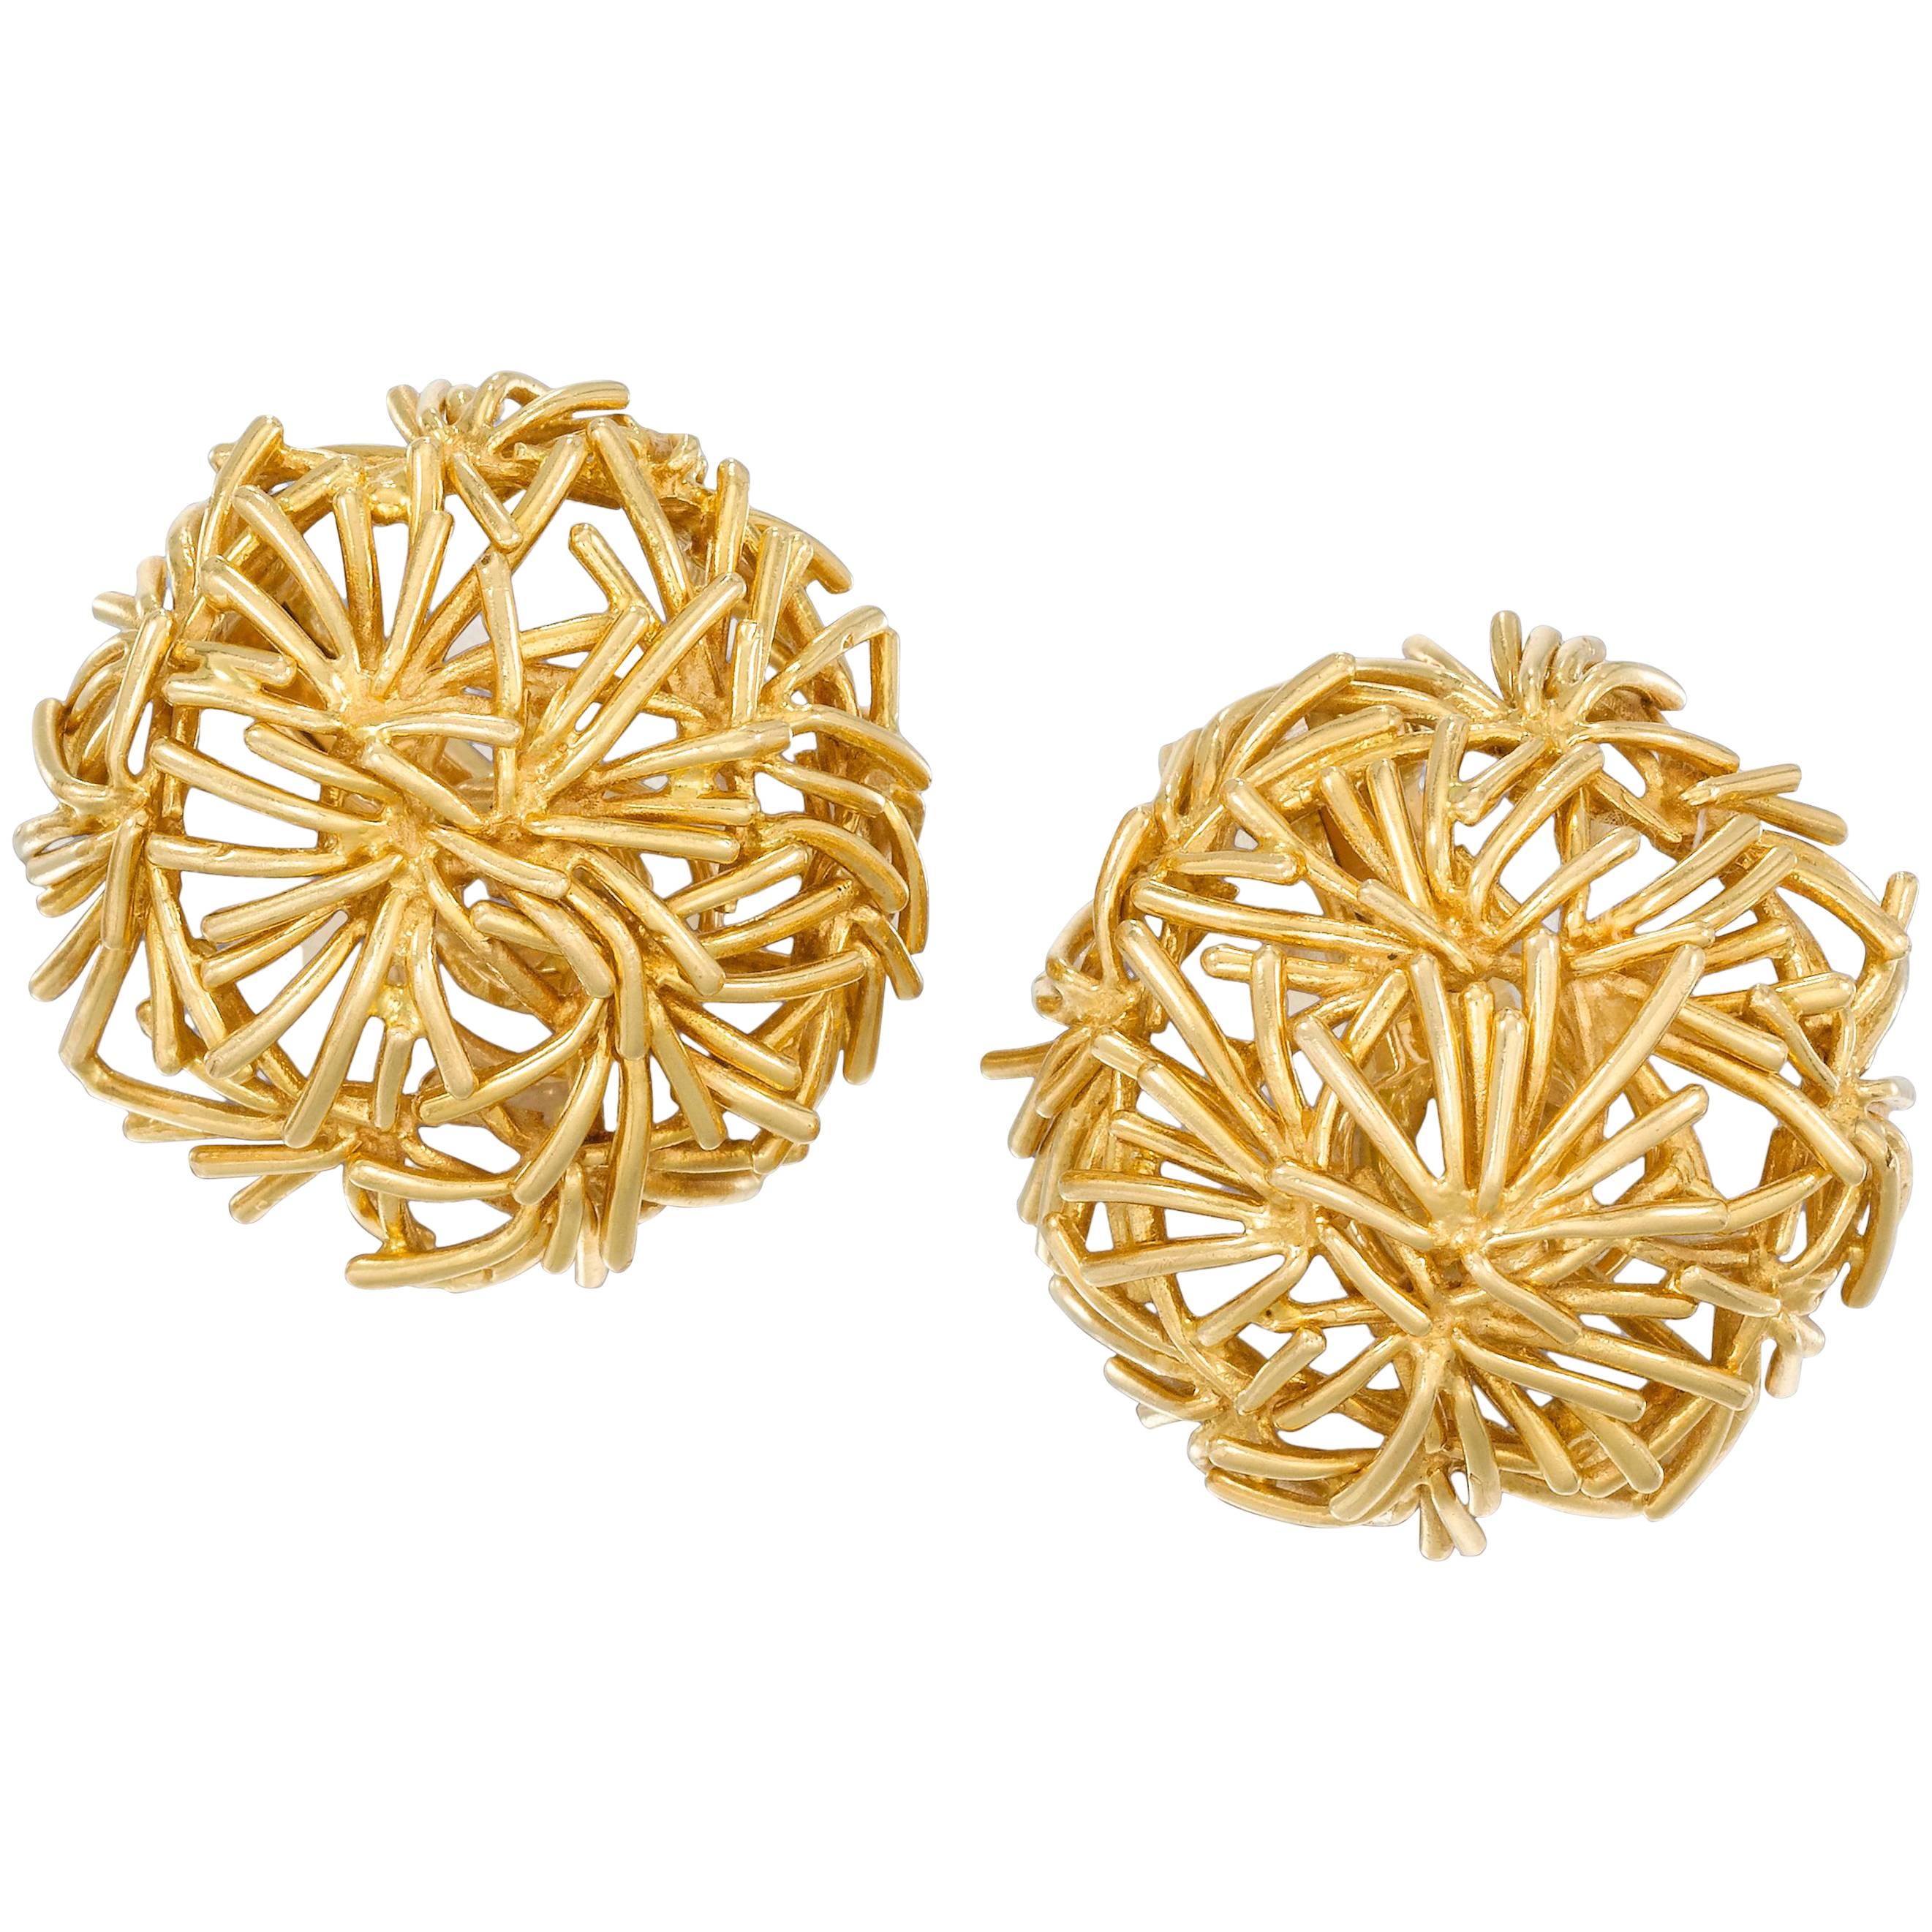 Pair of Gold Bird's Nest Earrings by Boucheron For Sale